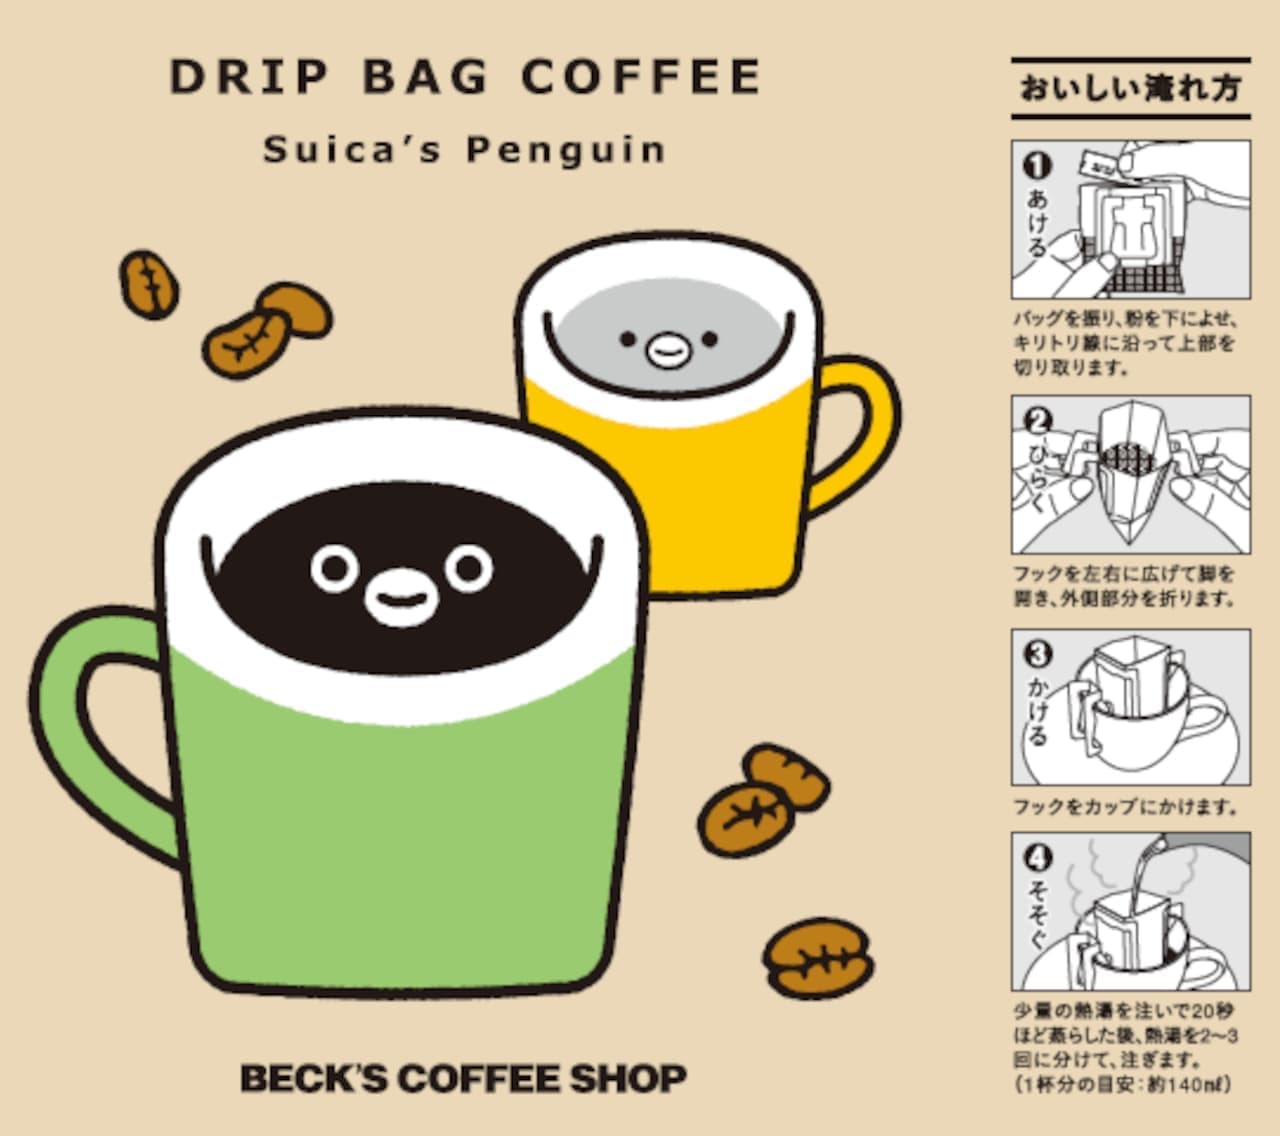 Beck's Coffee Shop "Suica's Penguin Drip Bag Coffee